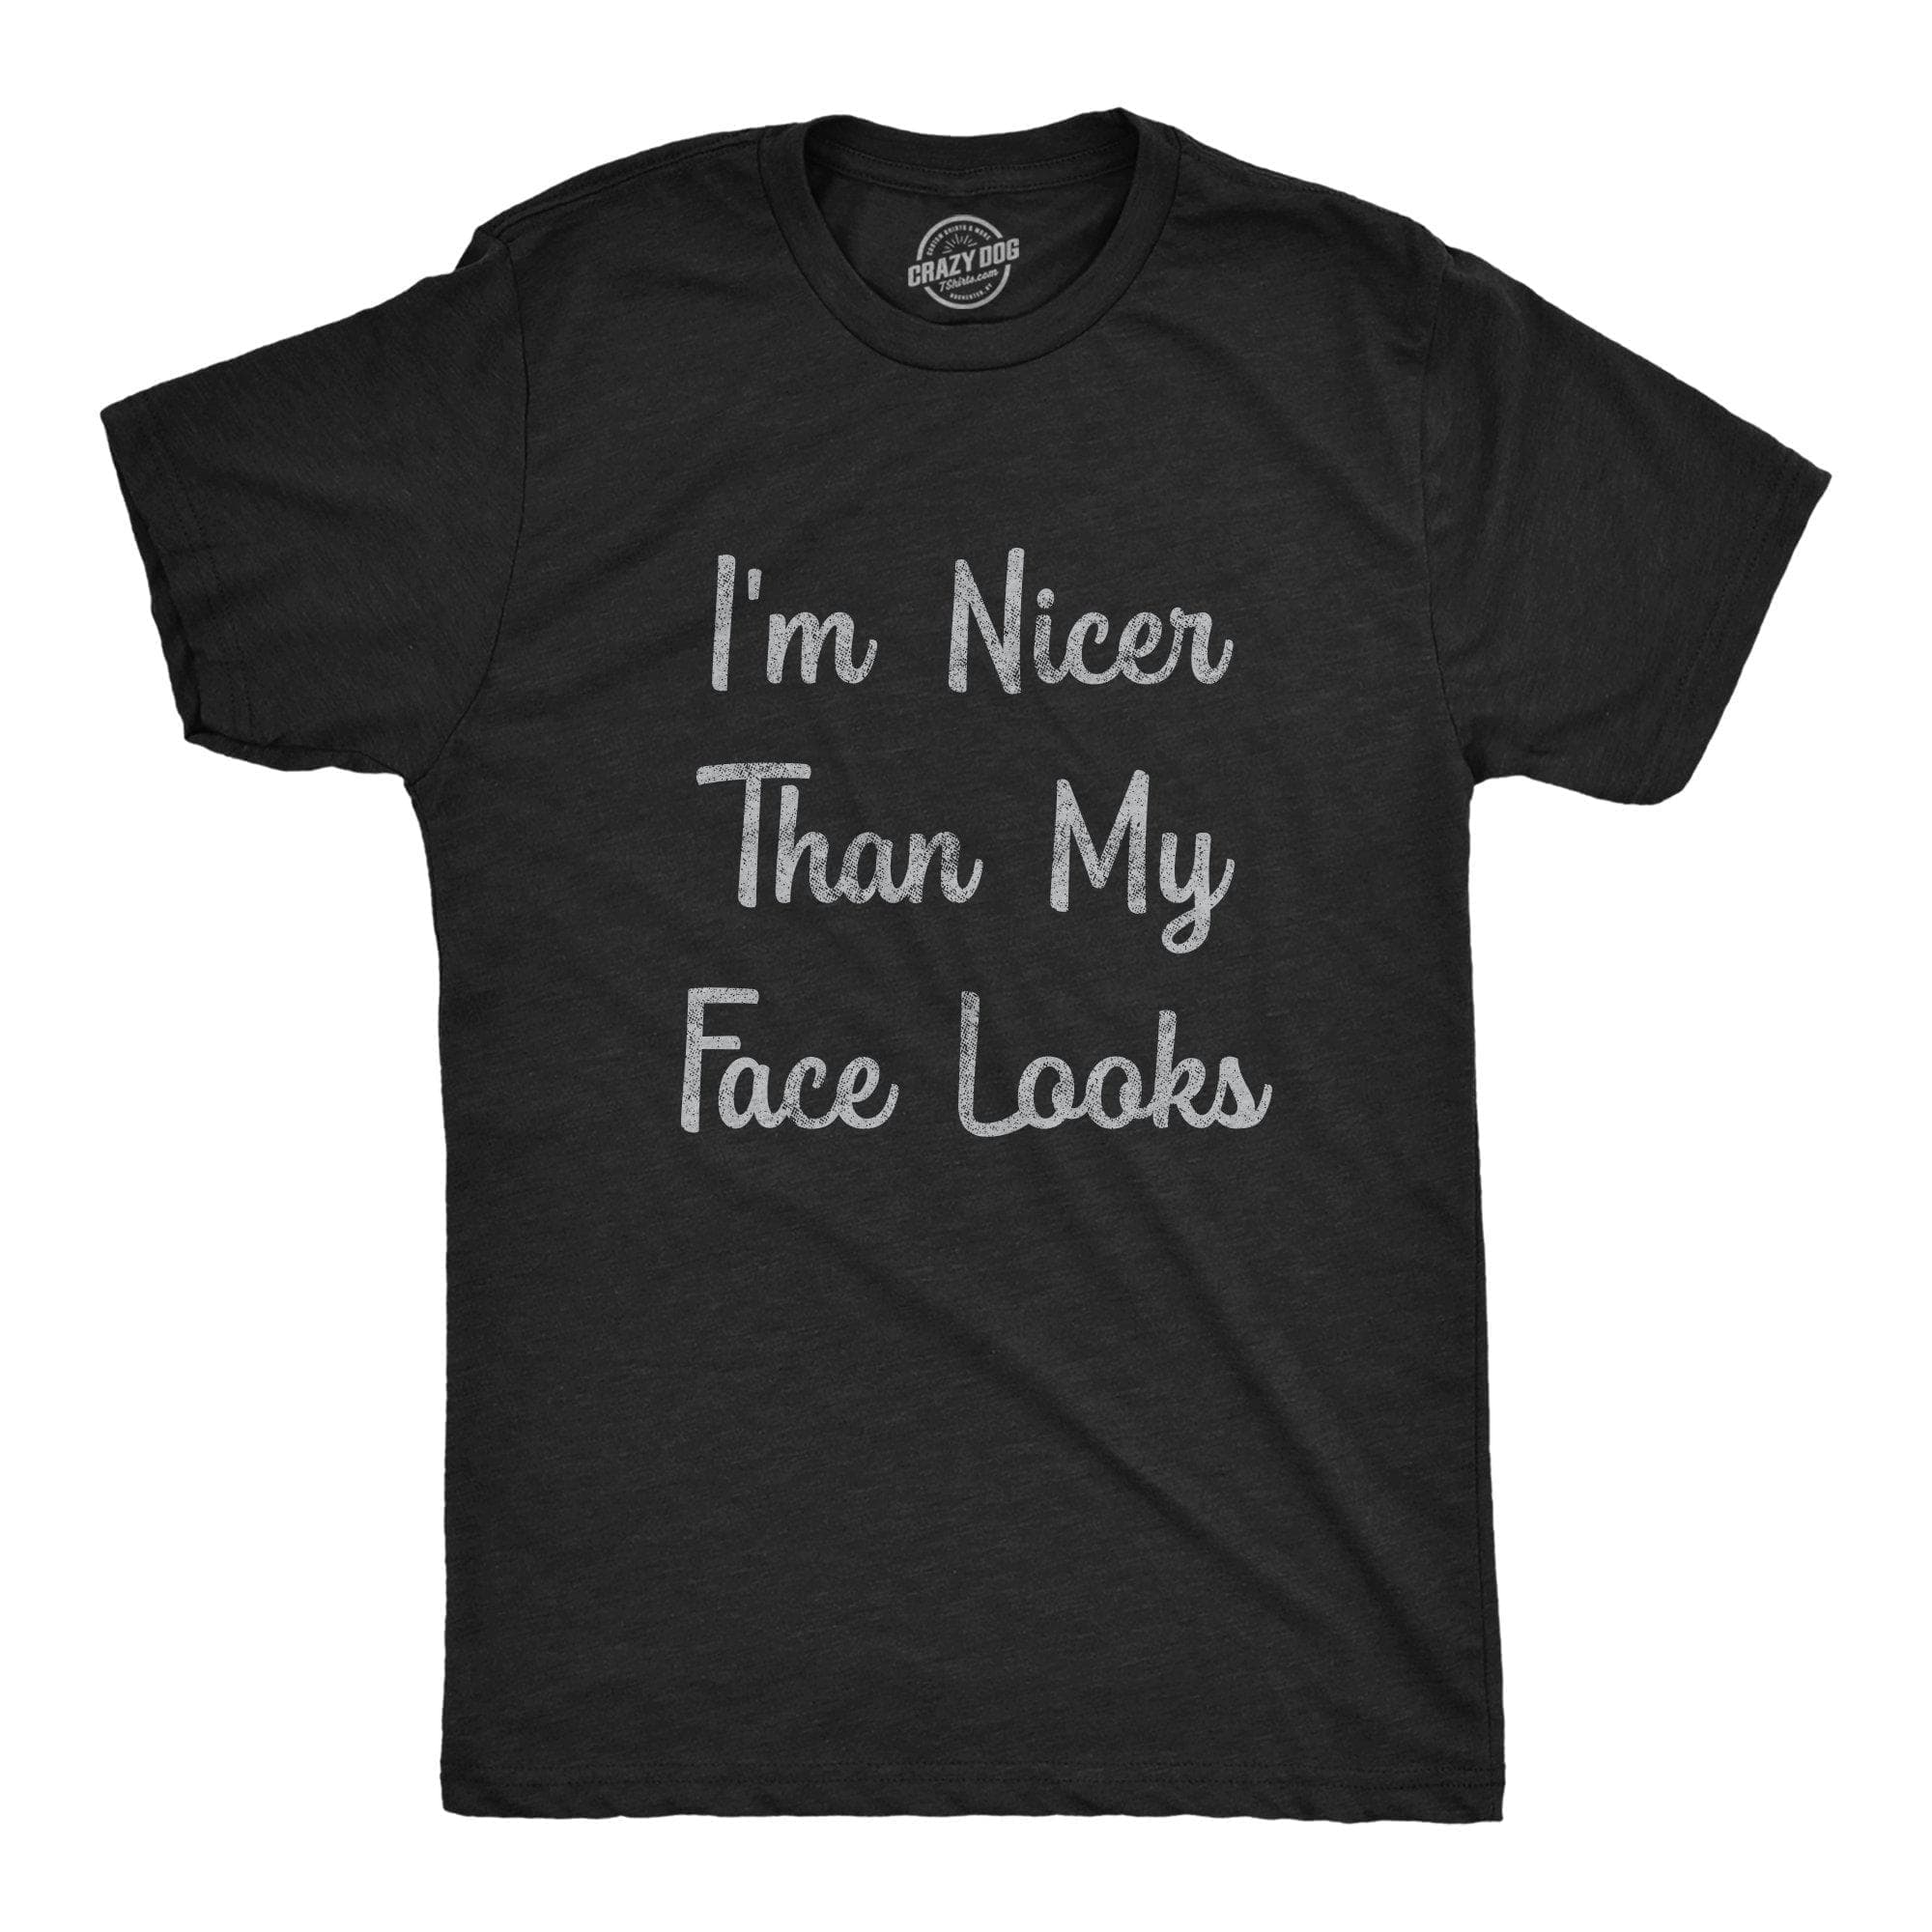 I'm Nicer Than My Face Looks Men's Tshirt - Crazy Dog T-Shirts